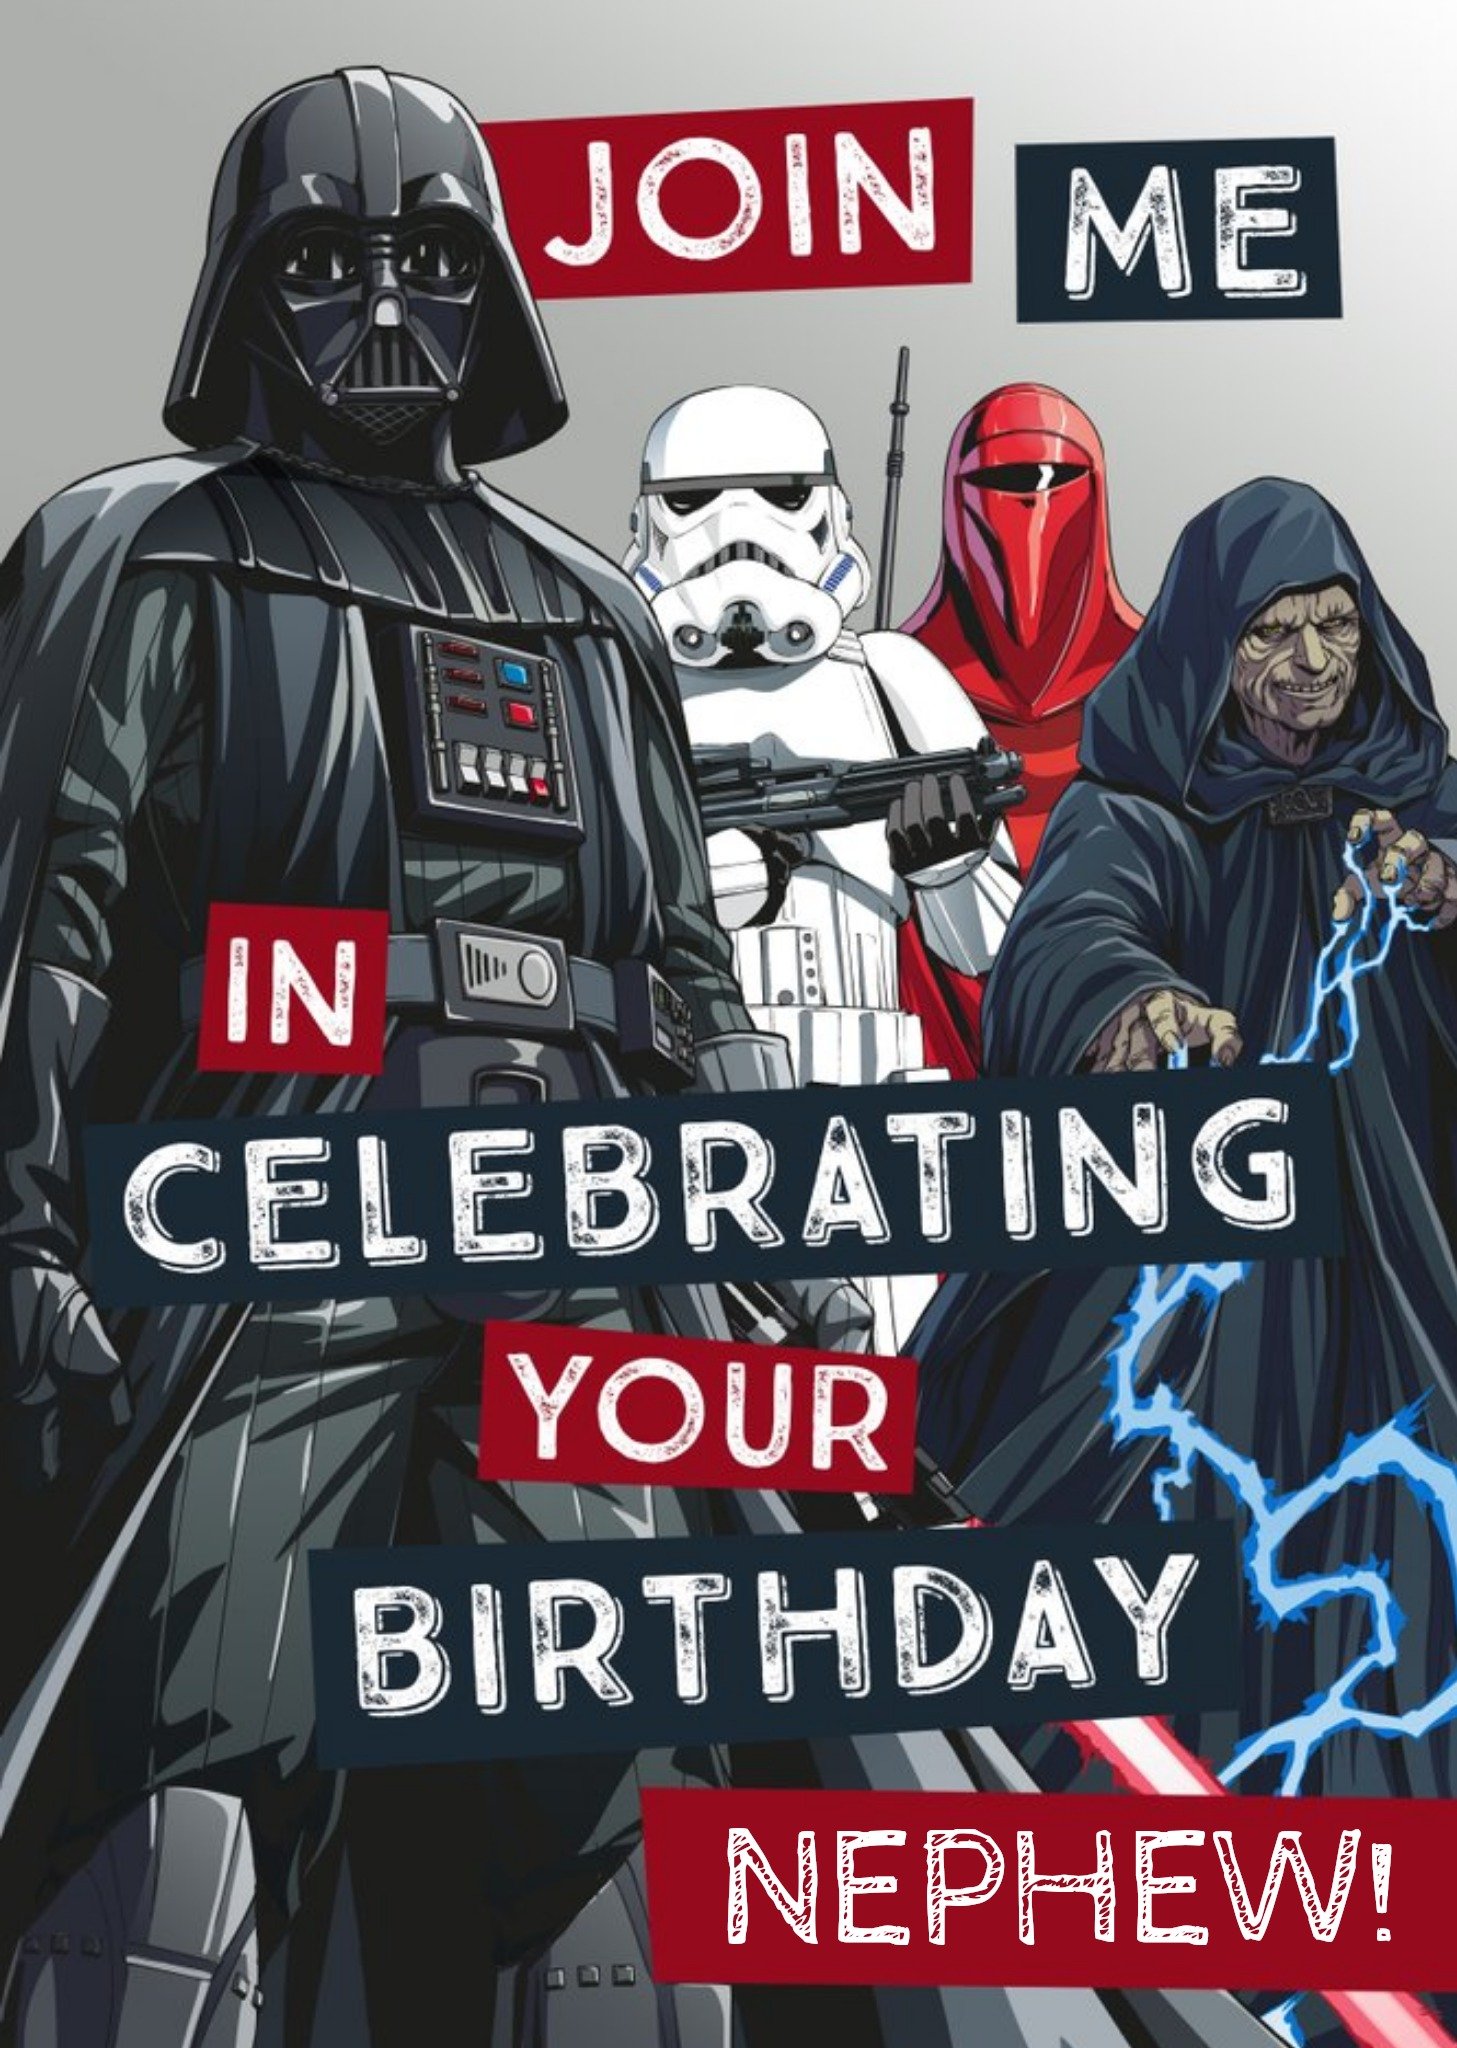 Disney Star Wars Nephew Birthday Card - Sith - Darth Vader, Large